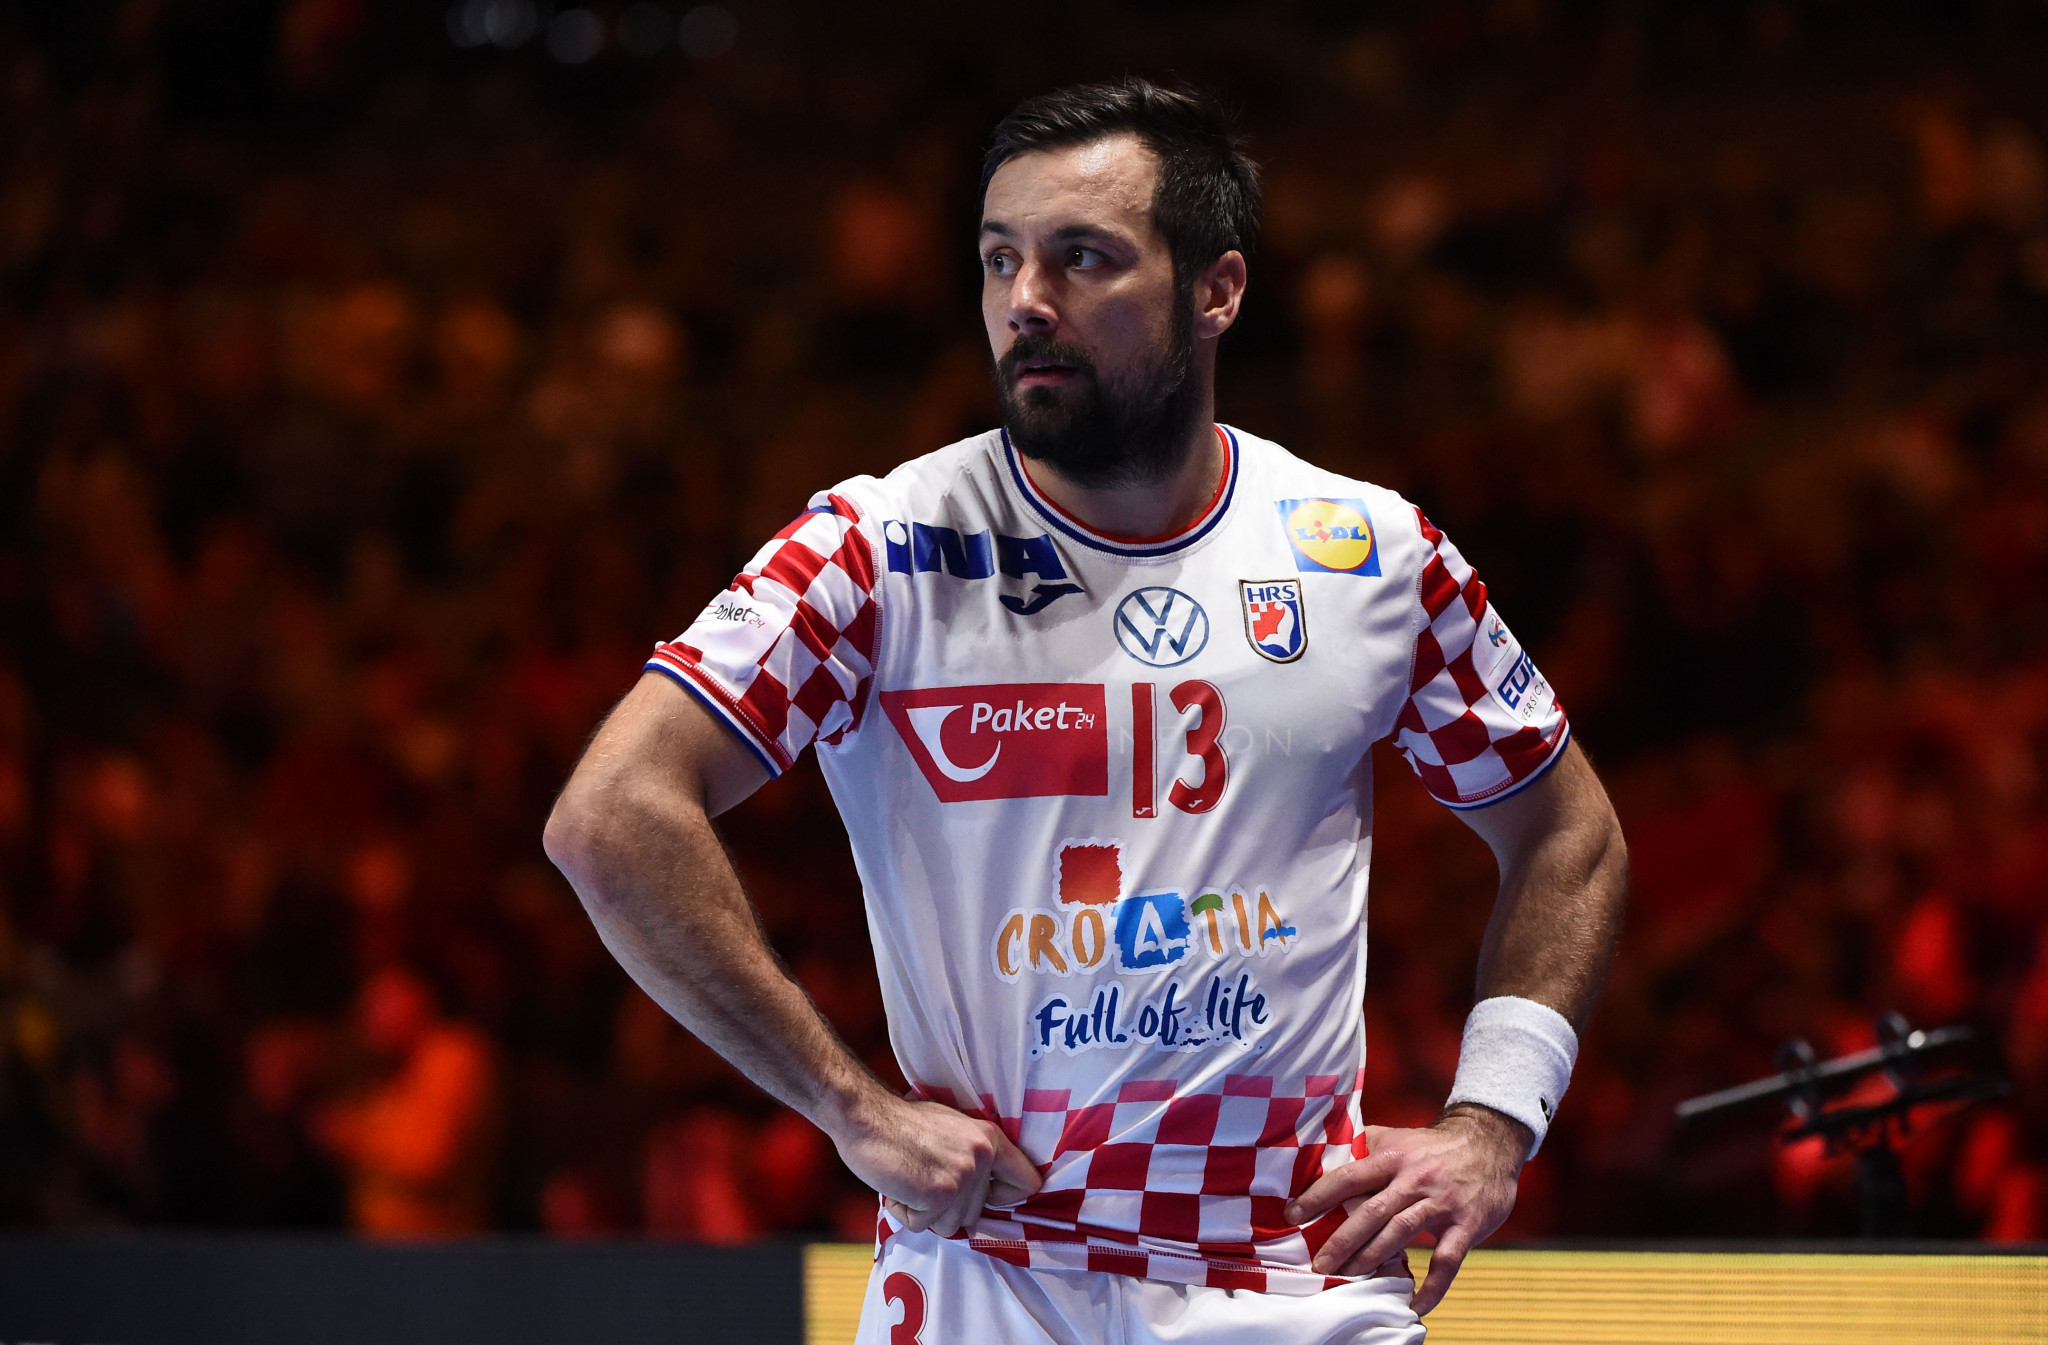 Croatia's looks on Zlatko Horvat after the European Men's Handball Championship final ©Getty Images